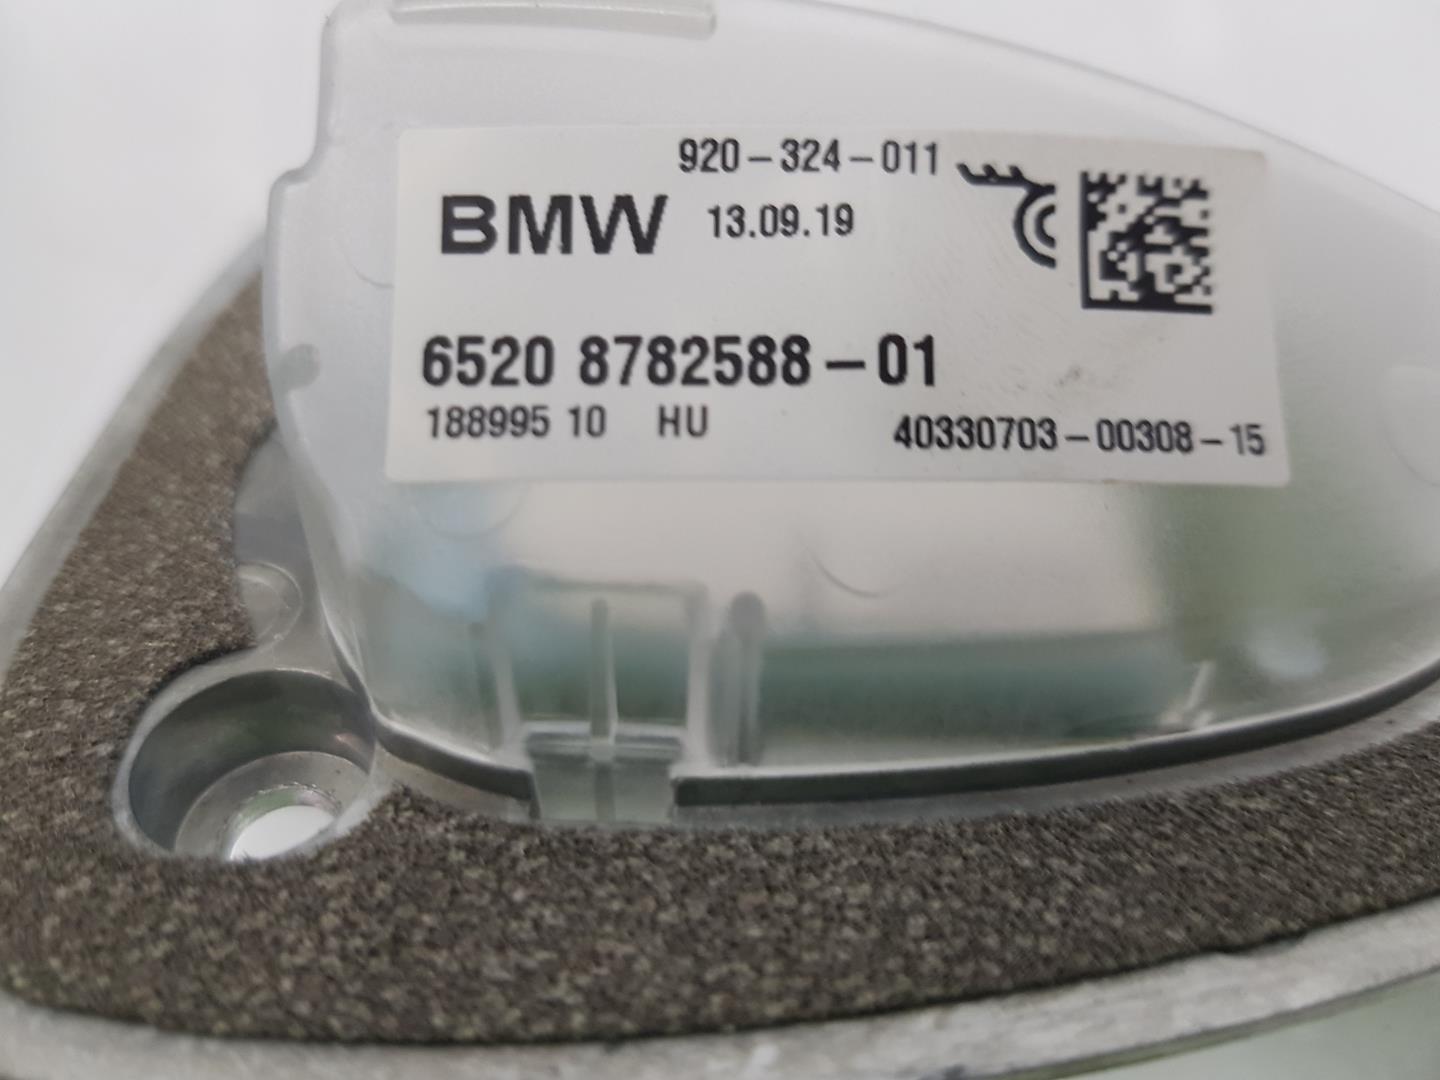 BMW 2 Series F22/F23 (2013-2020) Antena 65209121674, 65208782588, COLORNEGRO475 24136601